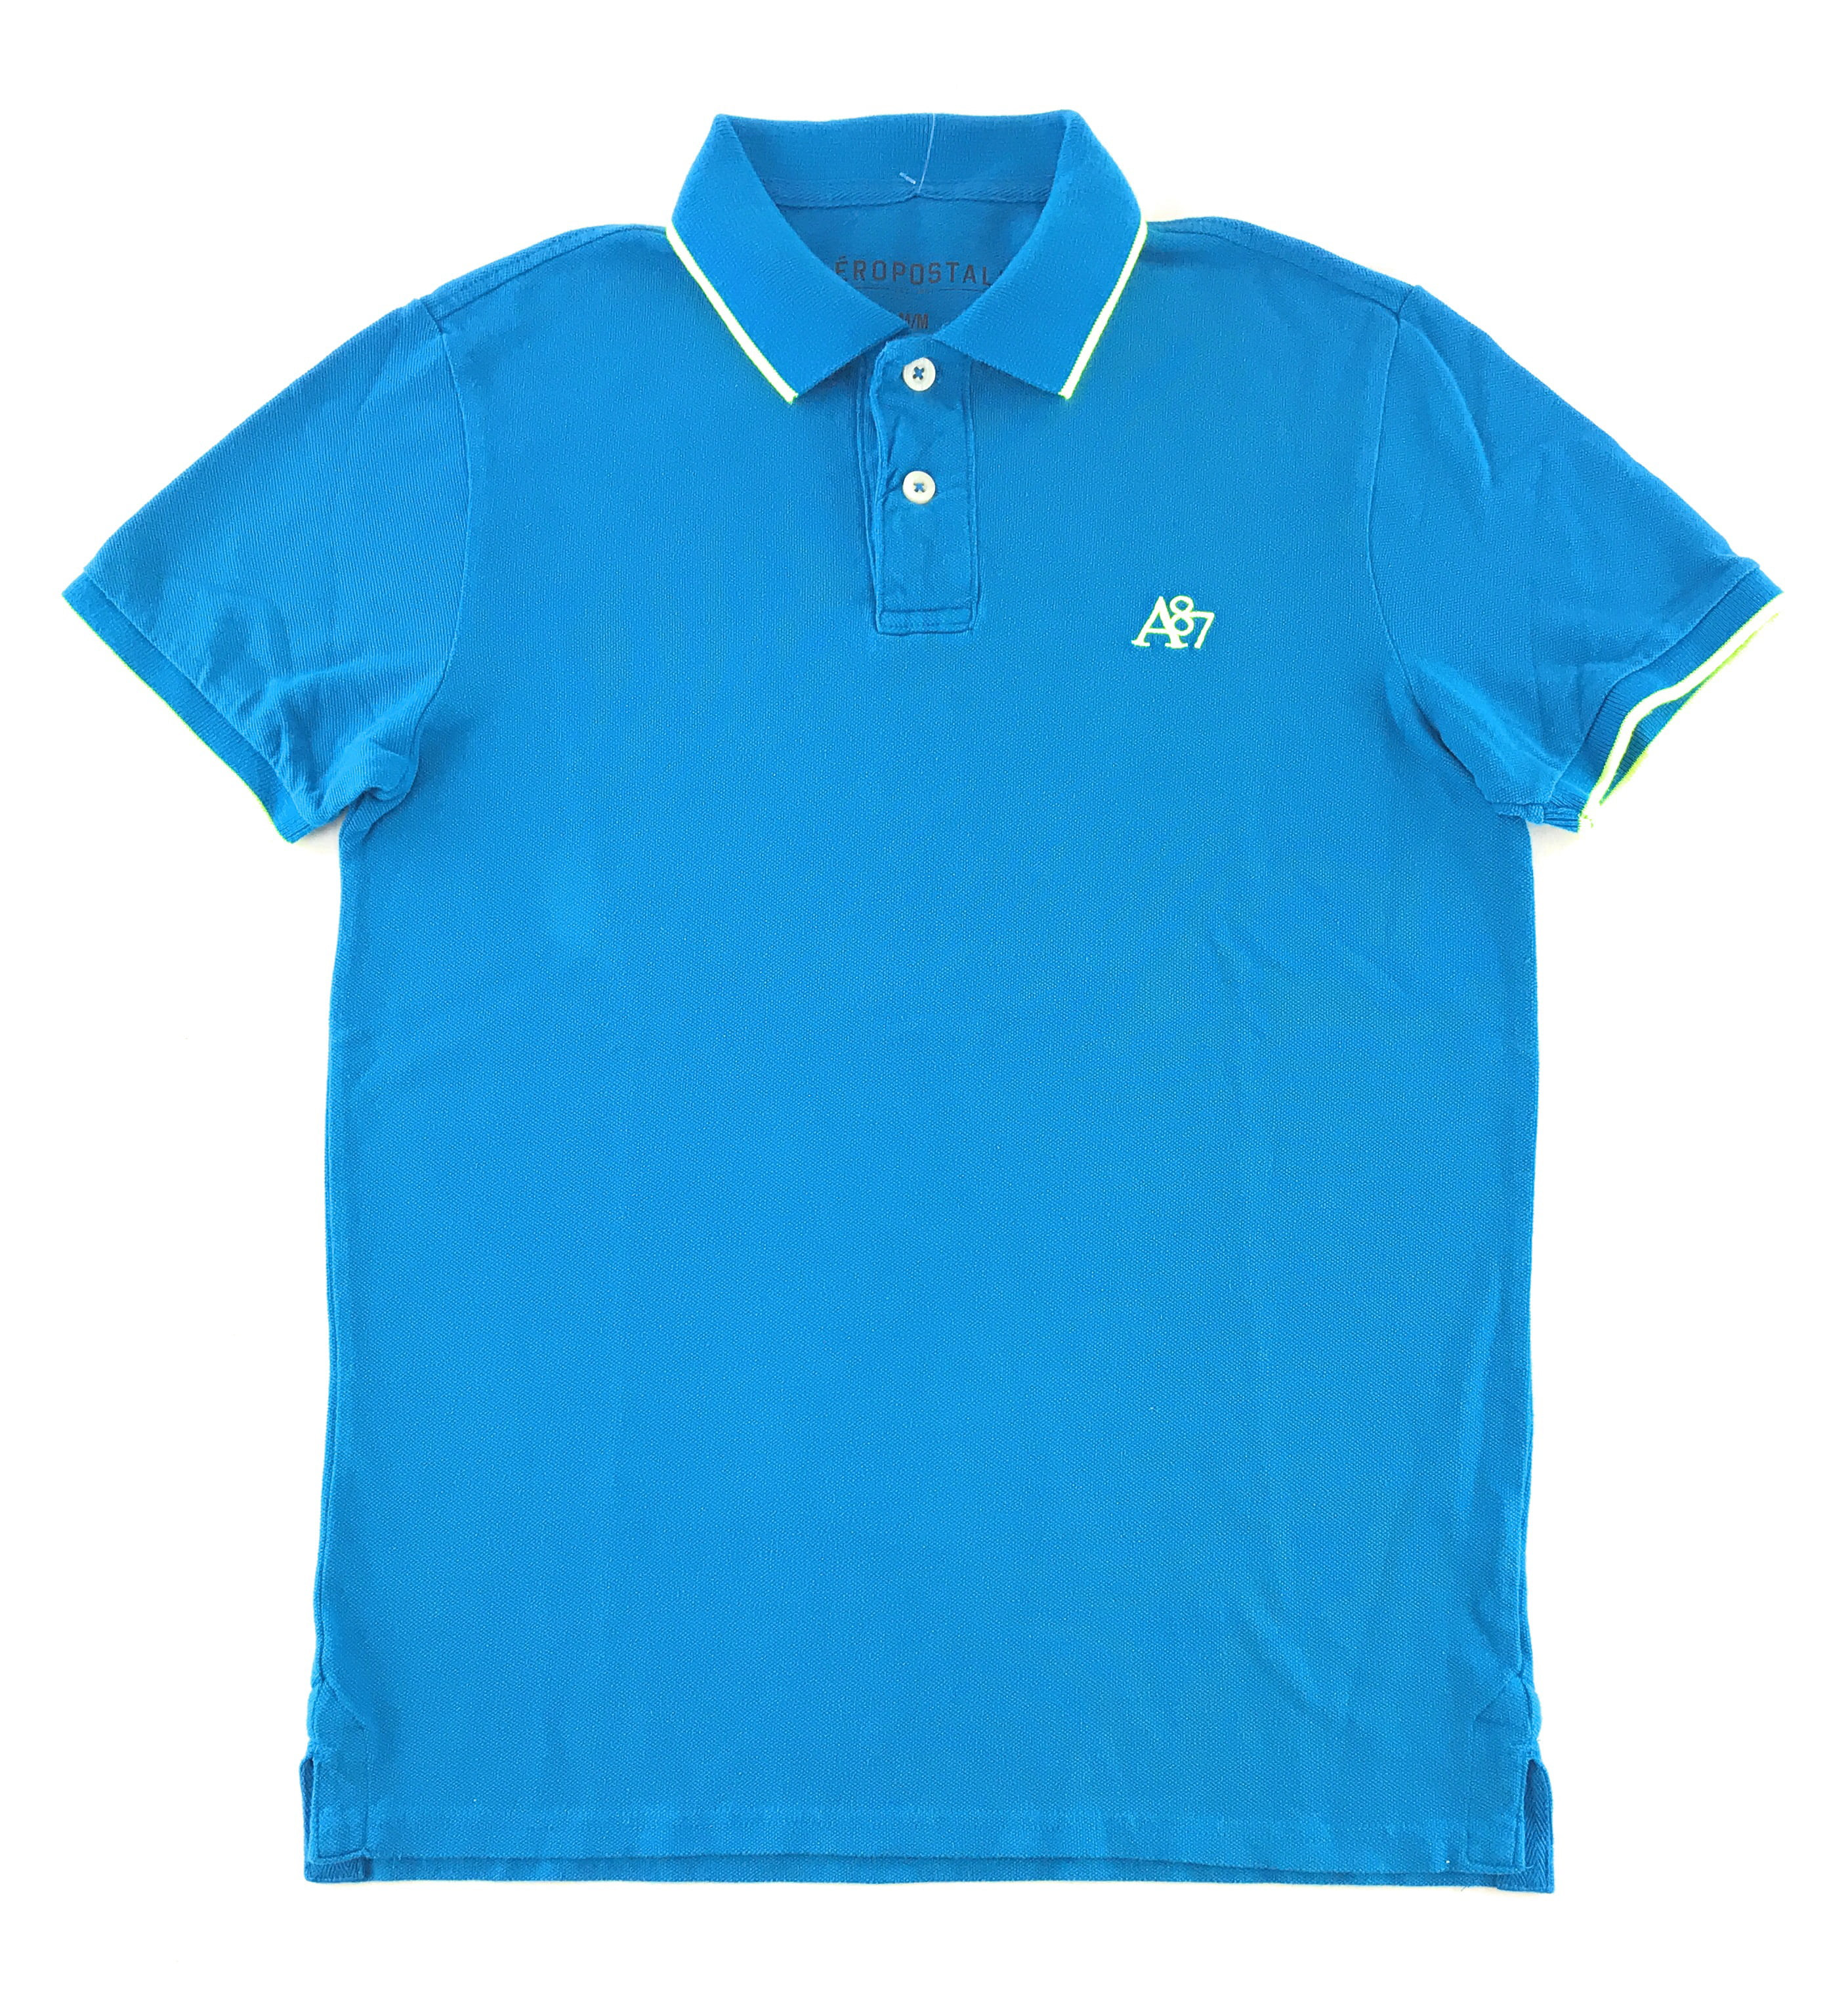 Aeropostale Mens Solid Polo Shirt - Walmart.com